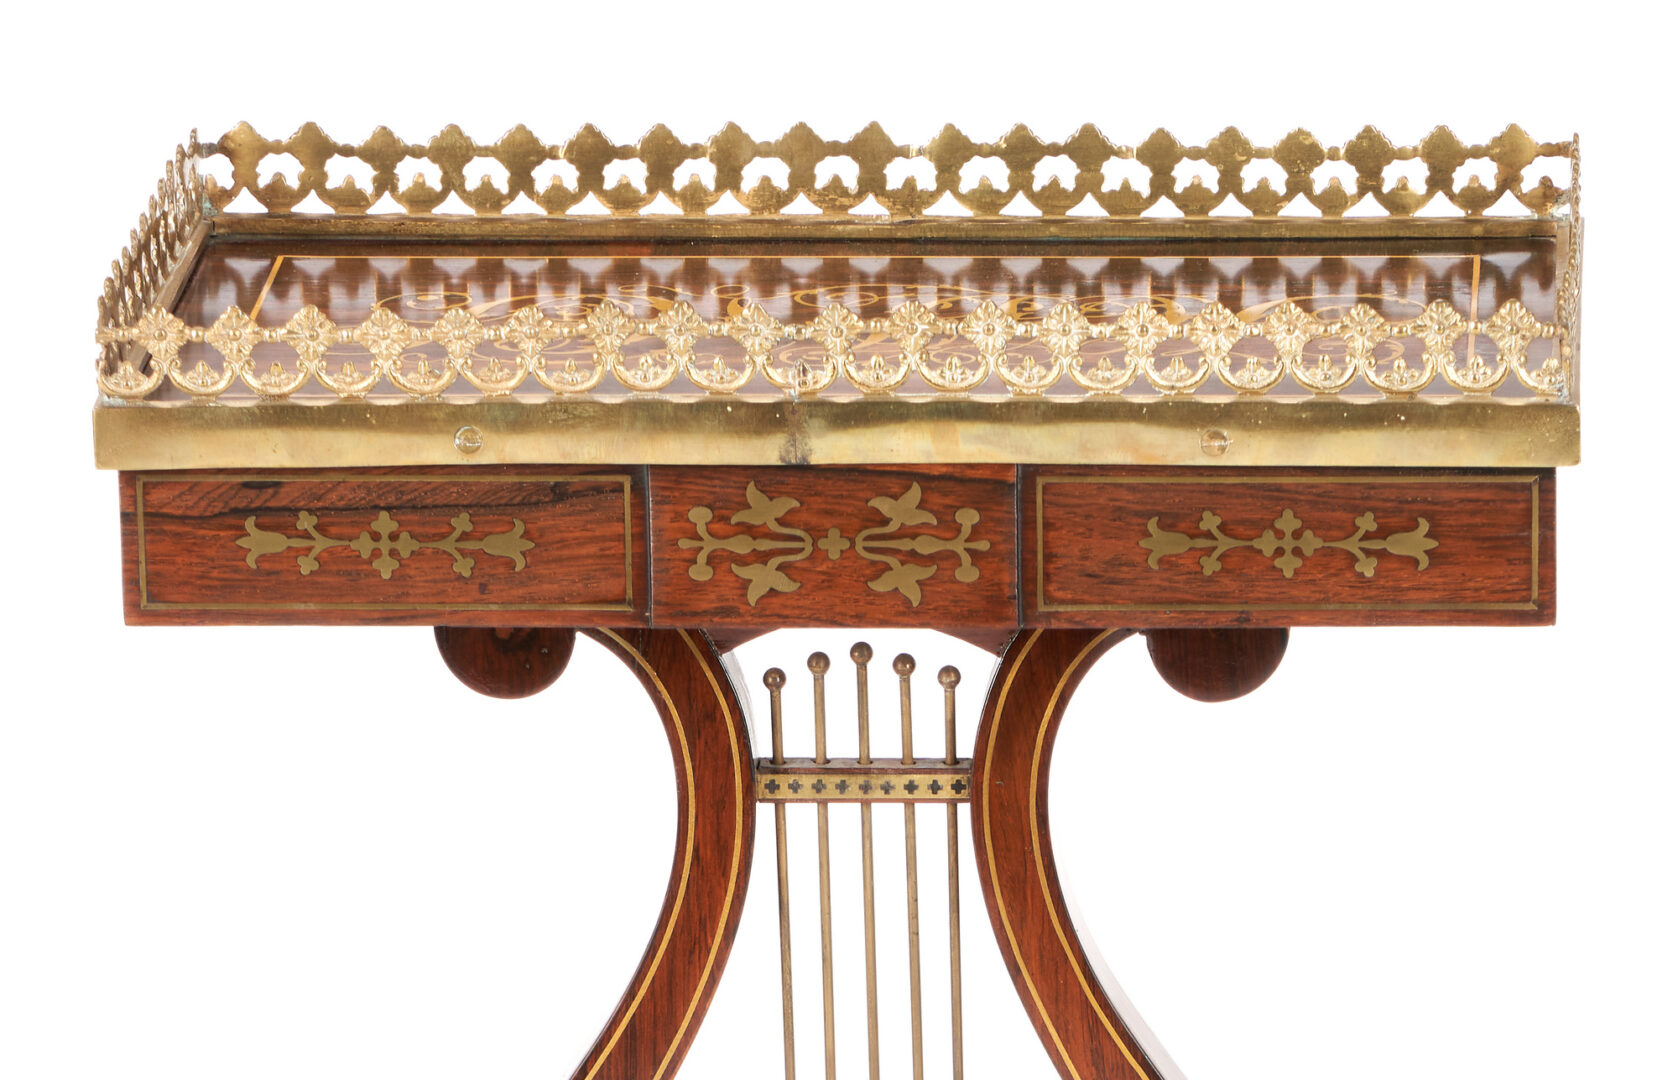 Lot 243: English Regency Gilt Brass Inlaid Table attr. George Oakley